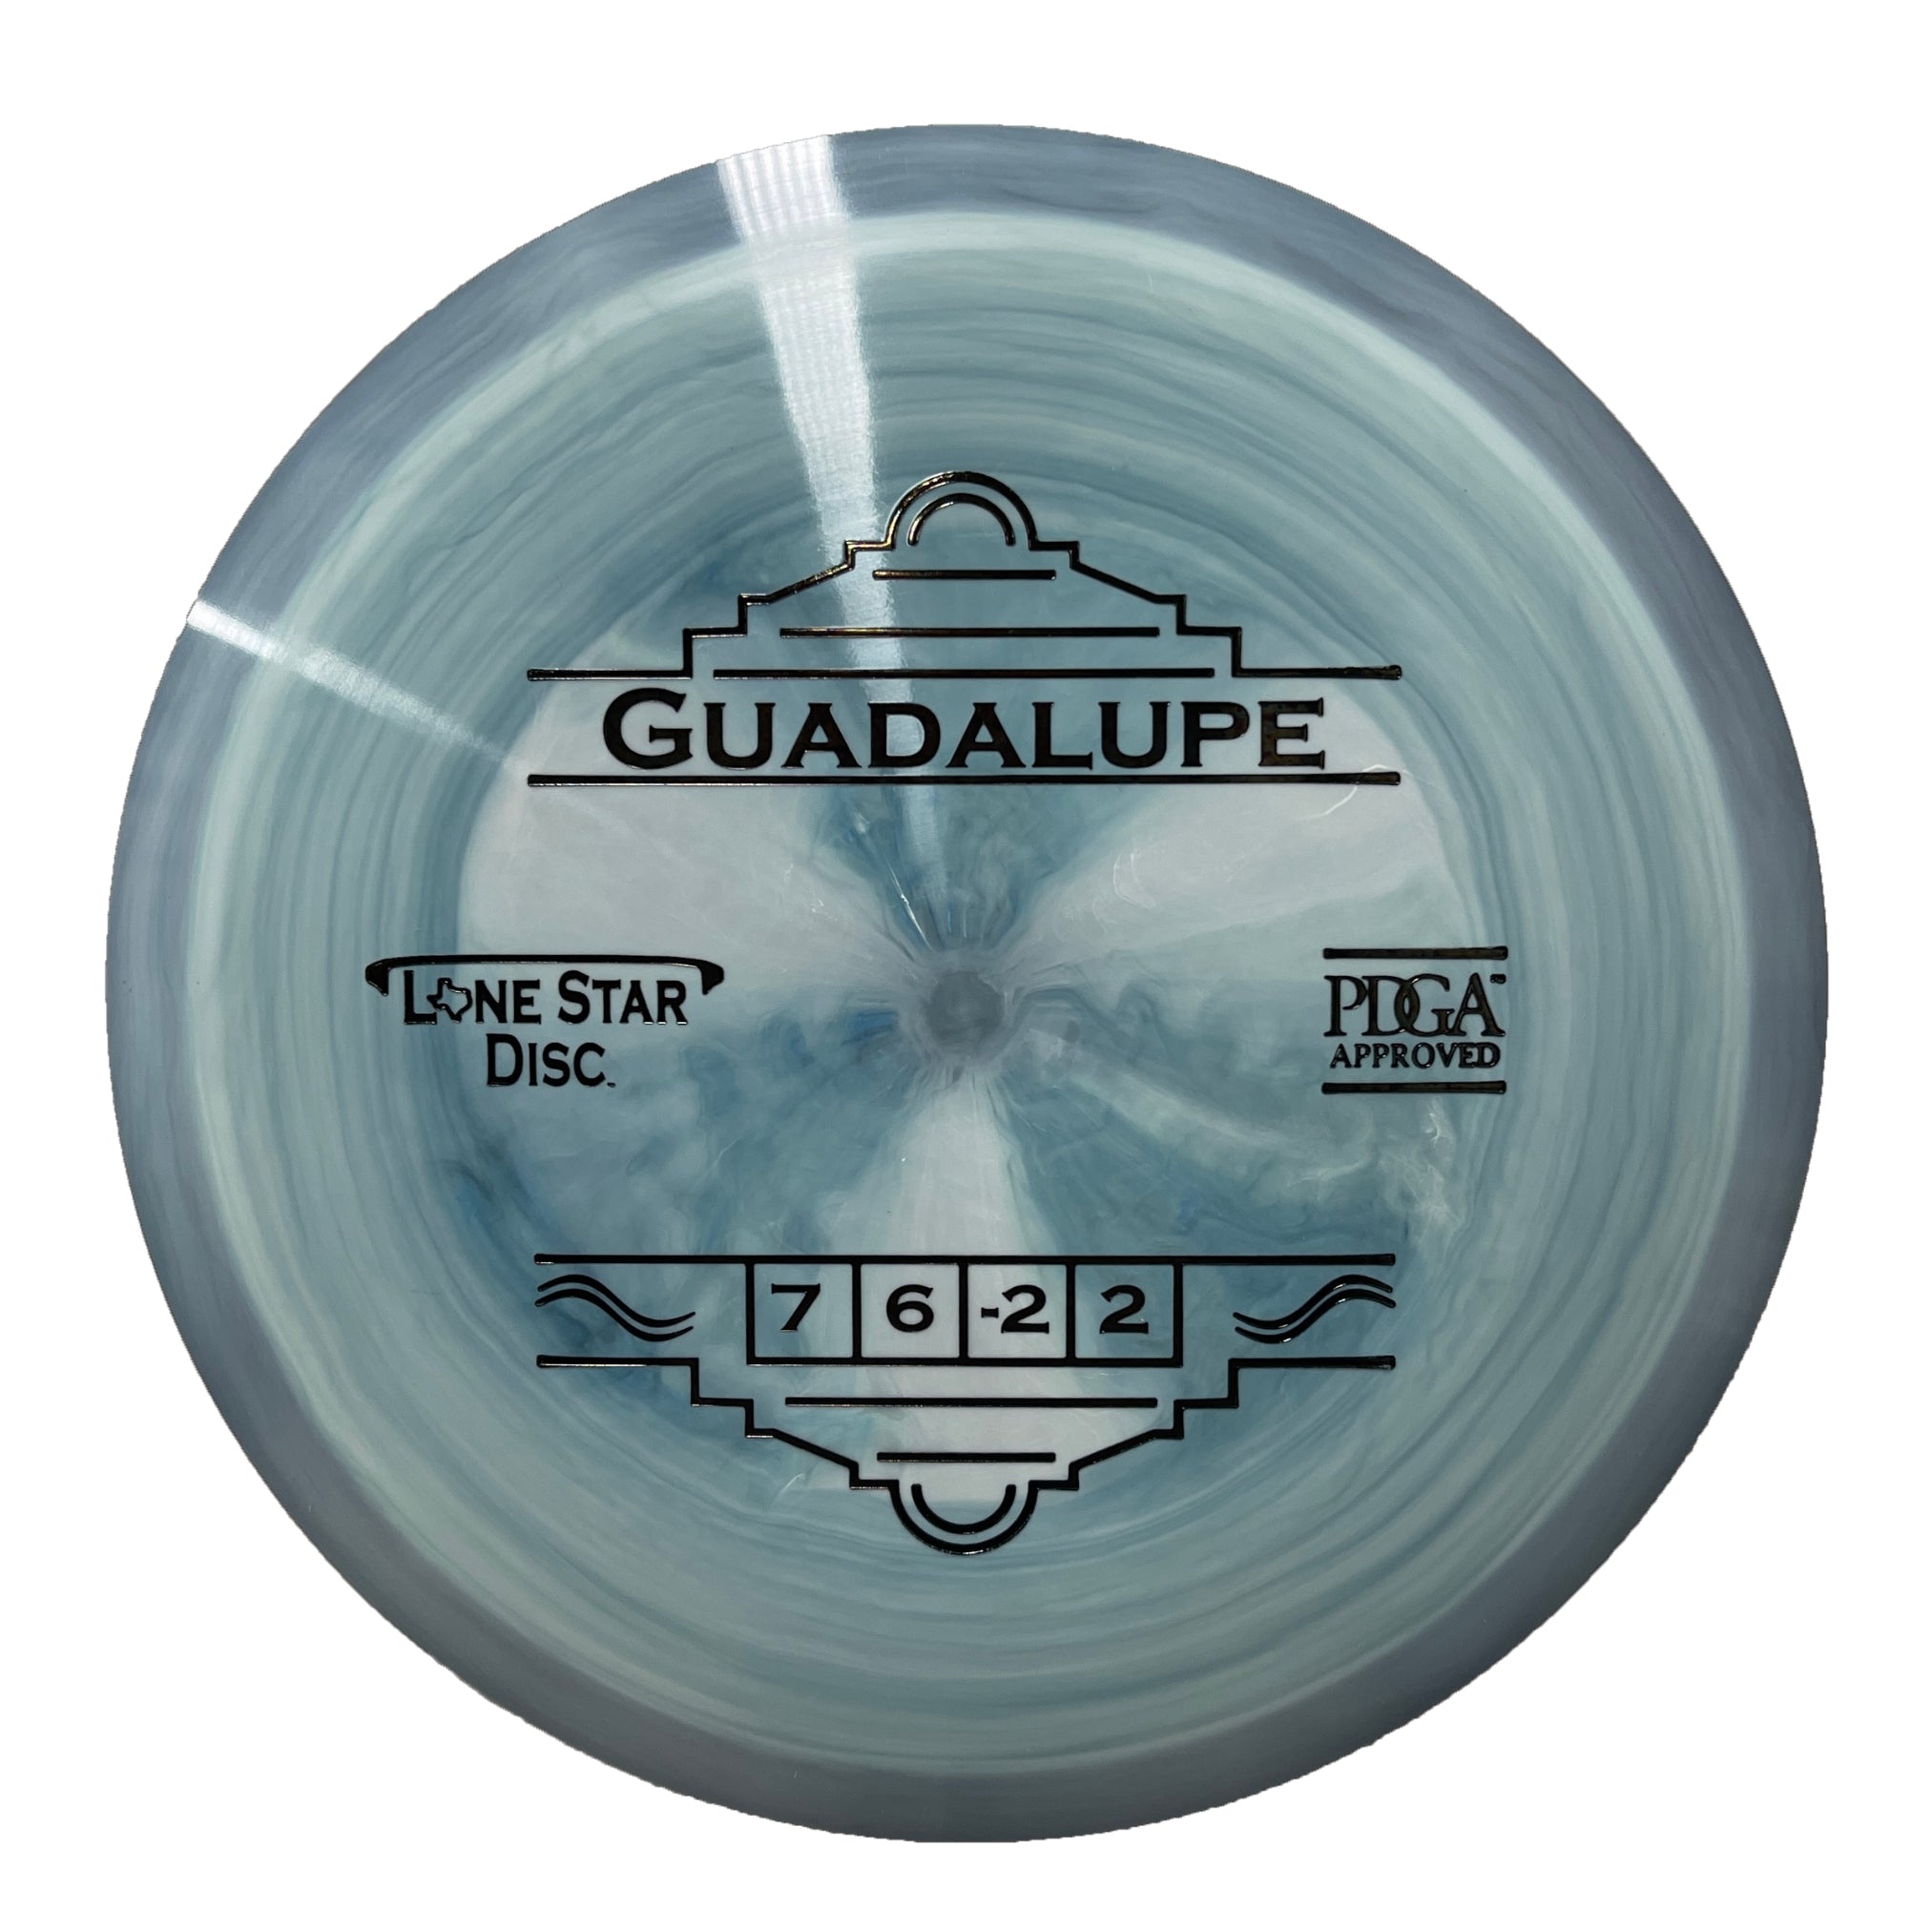 Lone Star Disc Guadalupe